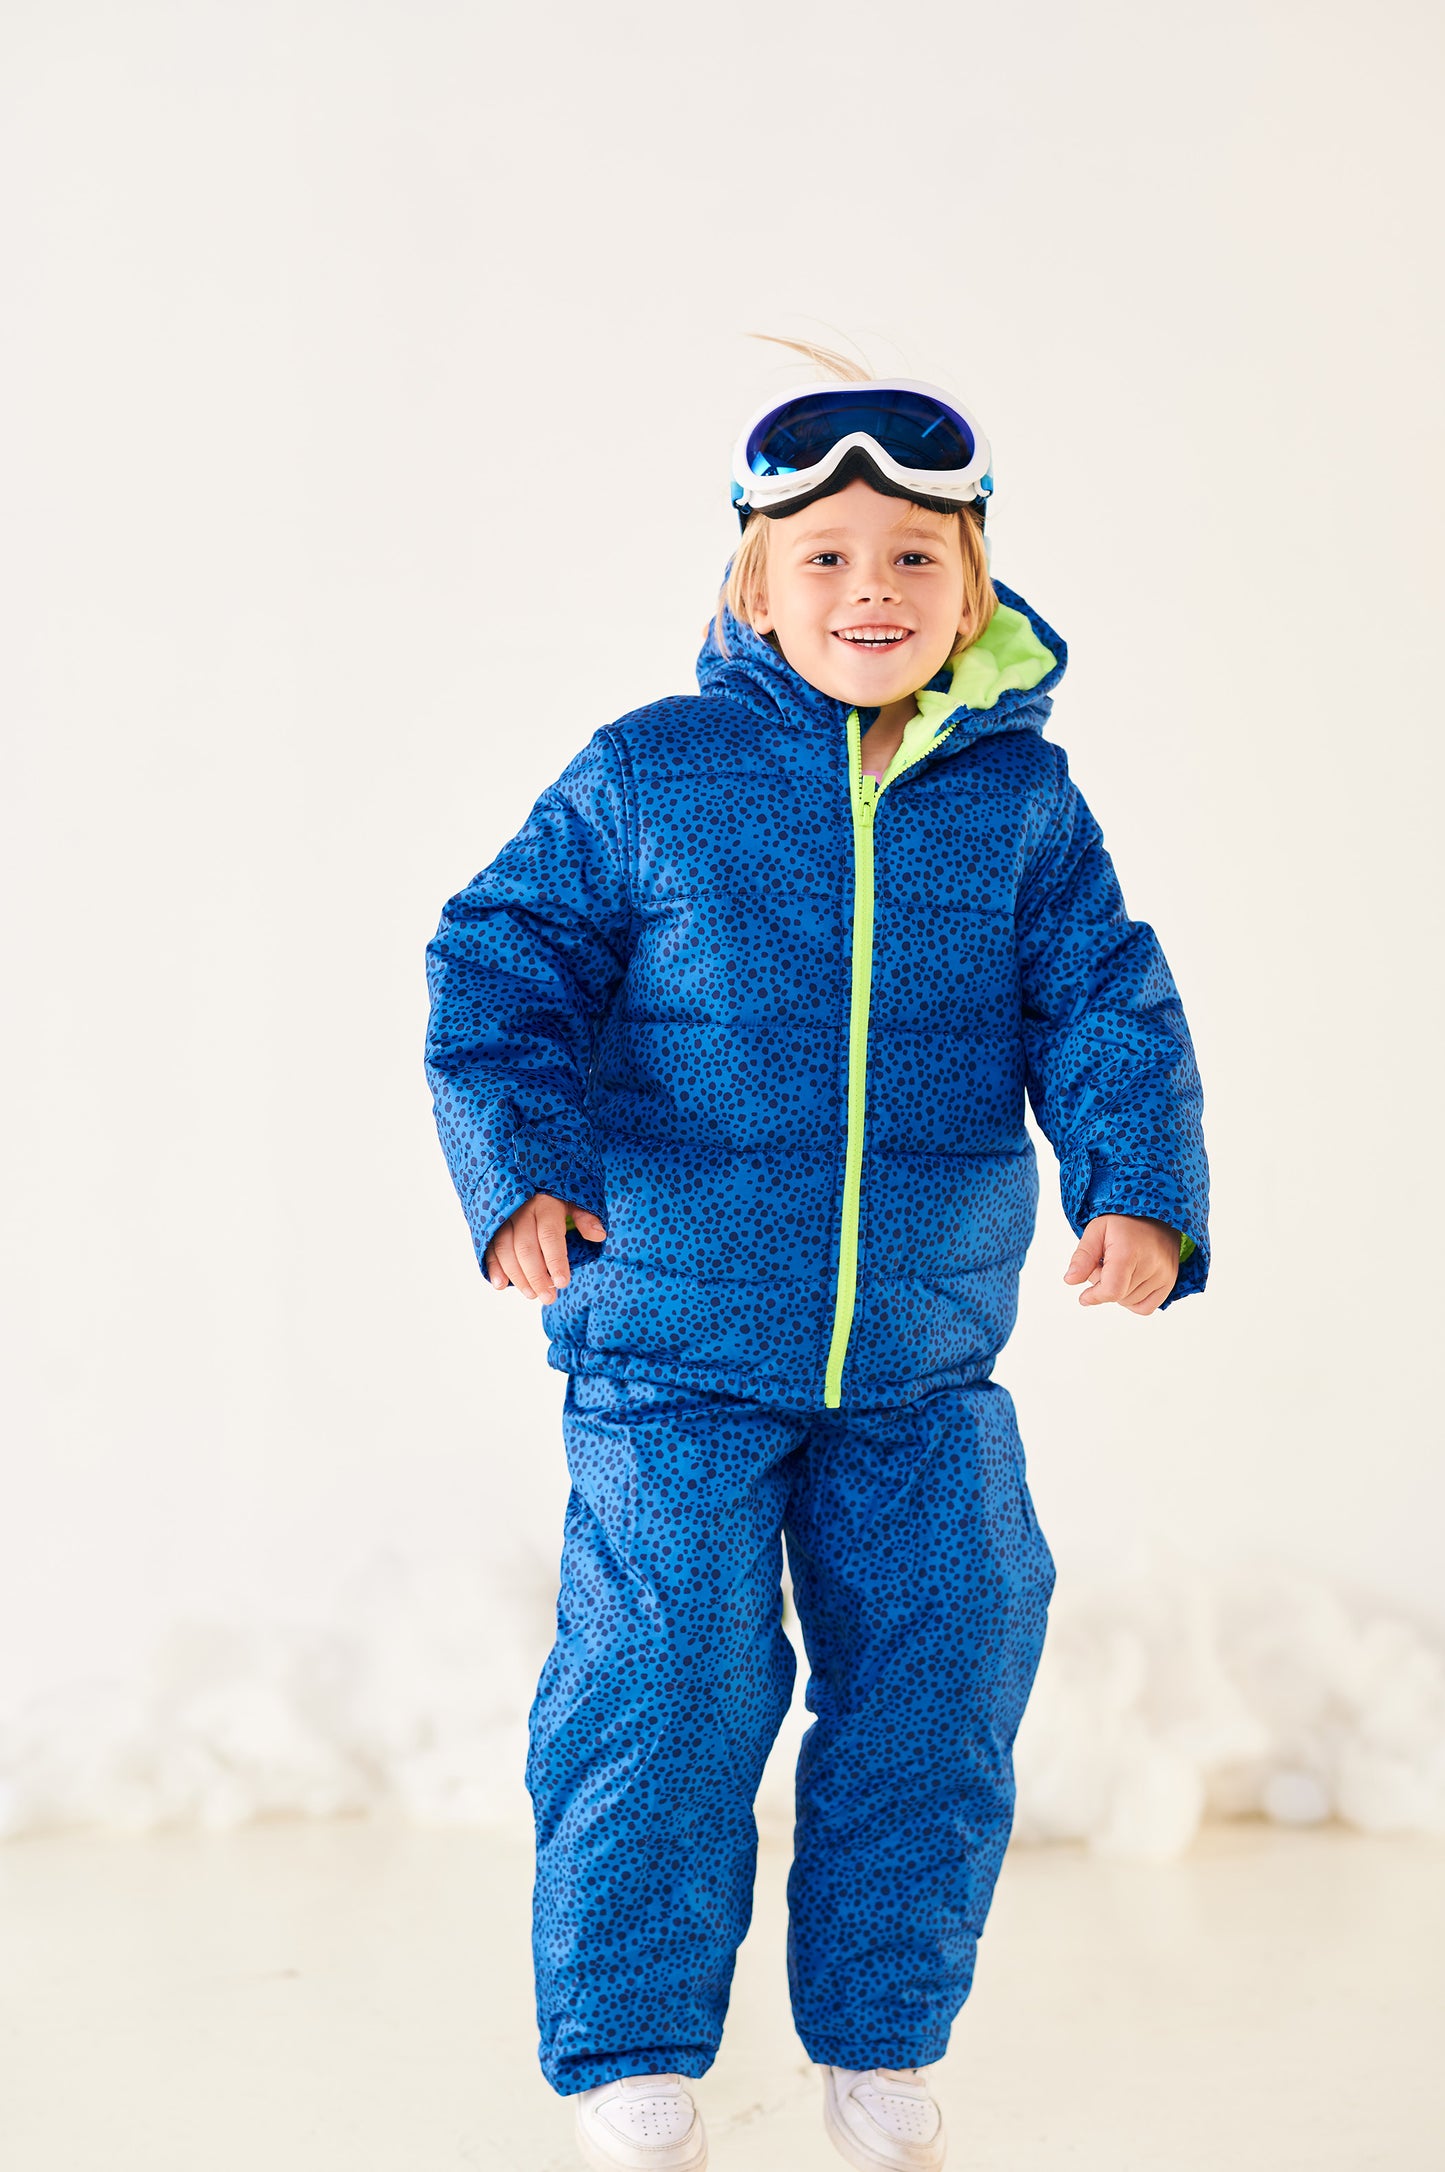 Lunettes de ski – Babiators Canada